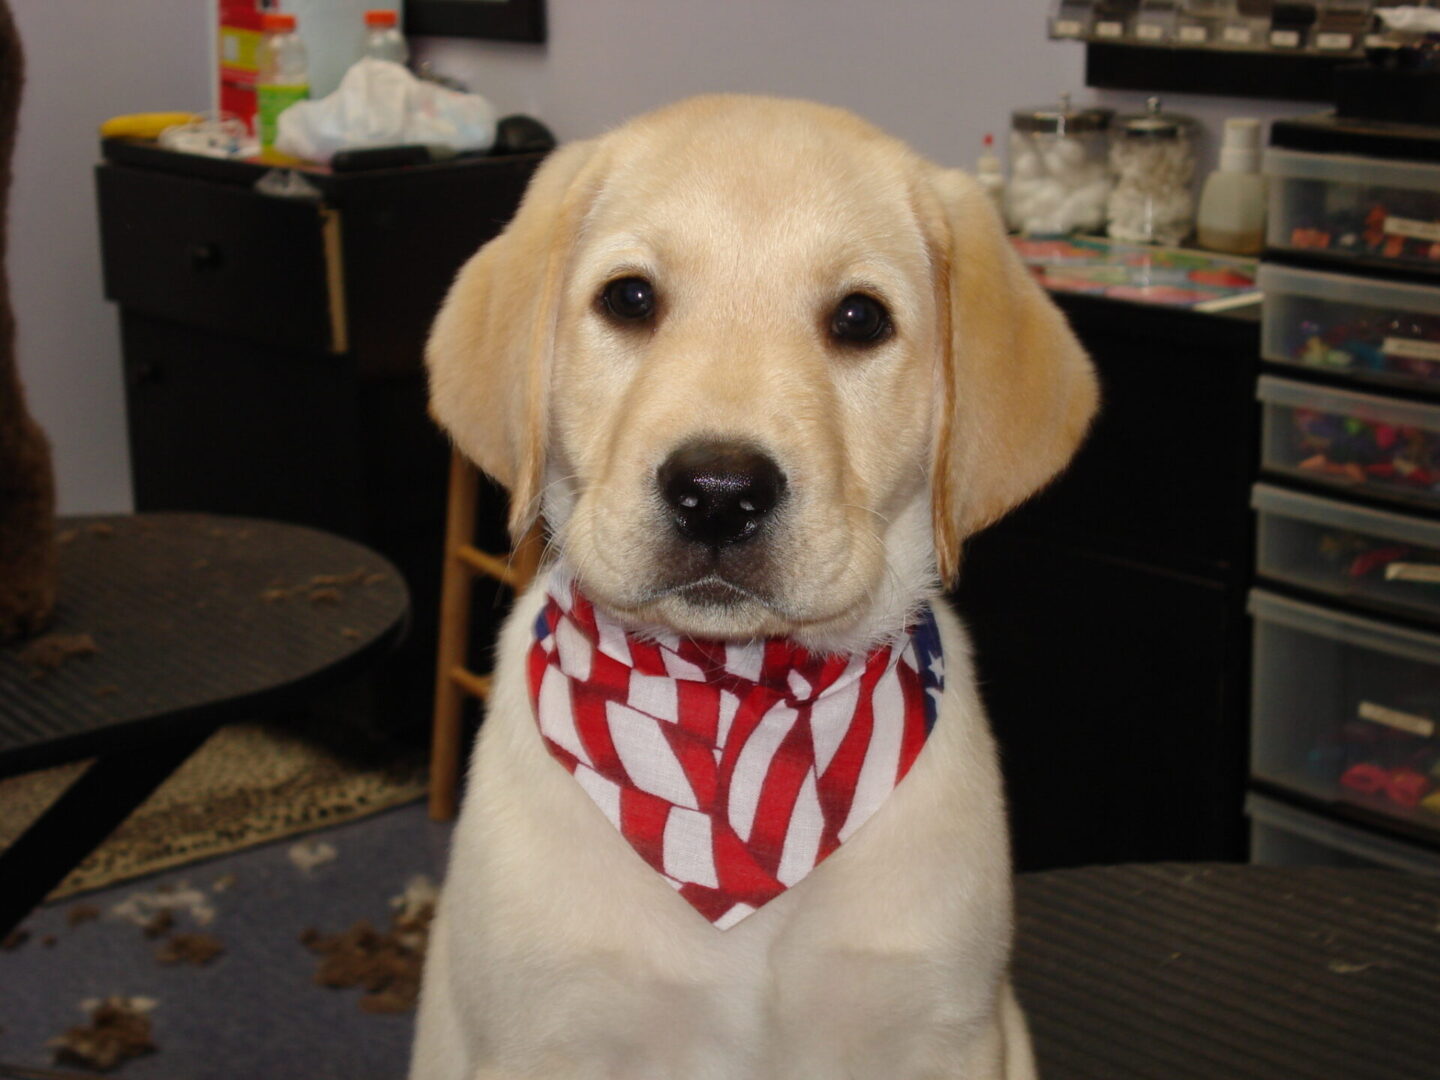 A Labrador puppy with a striped scarf